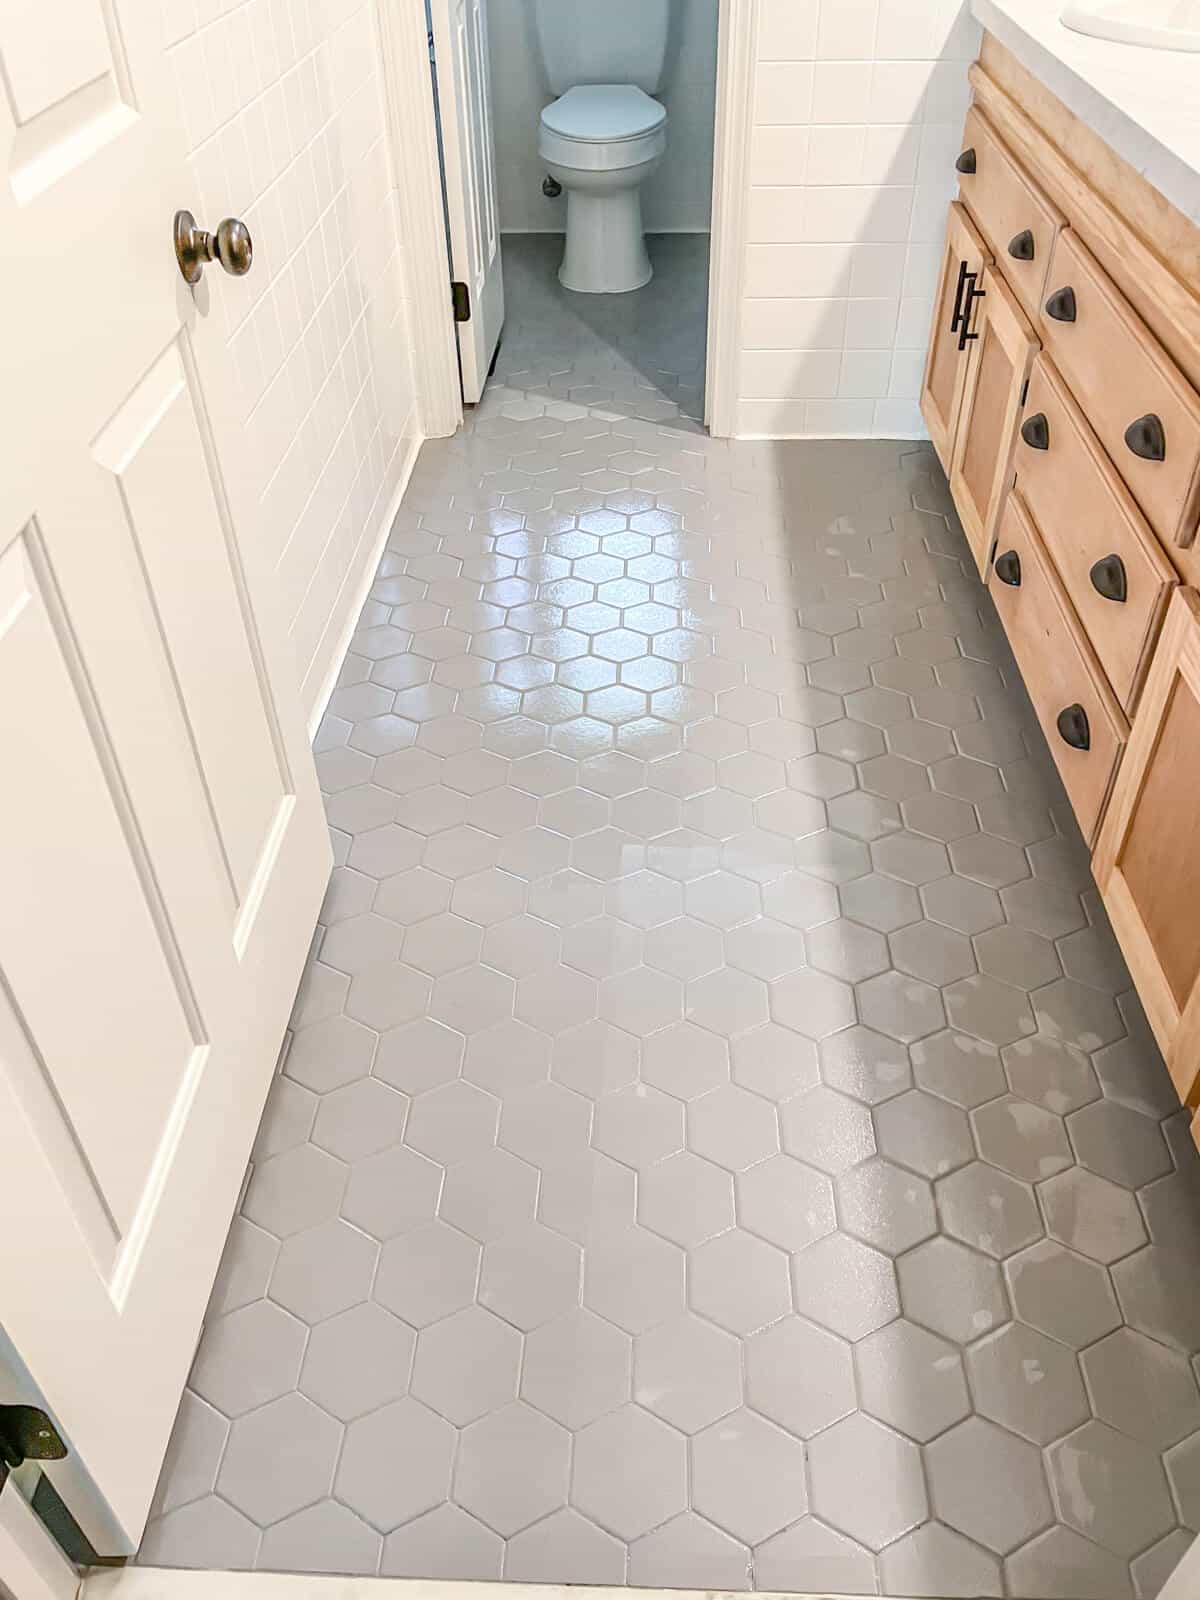 clear coat drying on painted tile bathroom floor